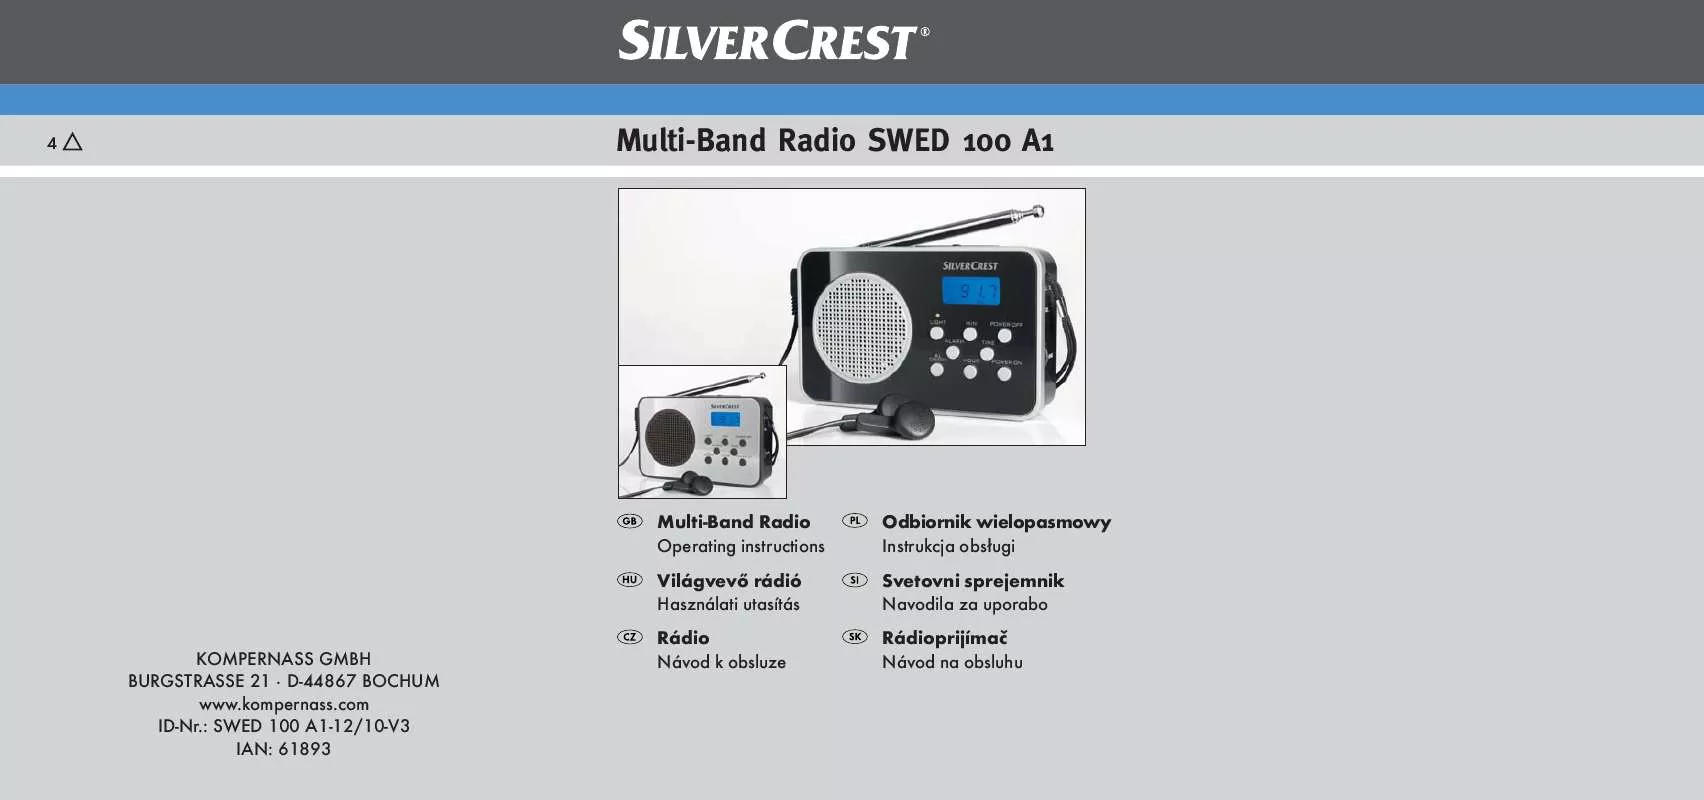 Mode d'emploi SILVERCREST SWED 100 A1 MULTI-BAND RADIO